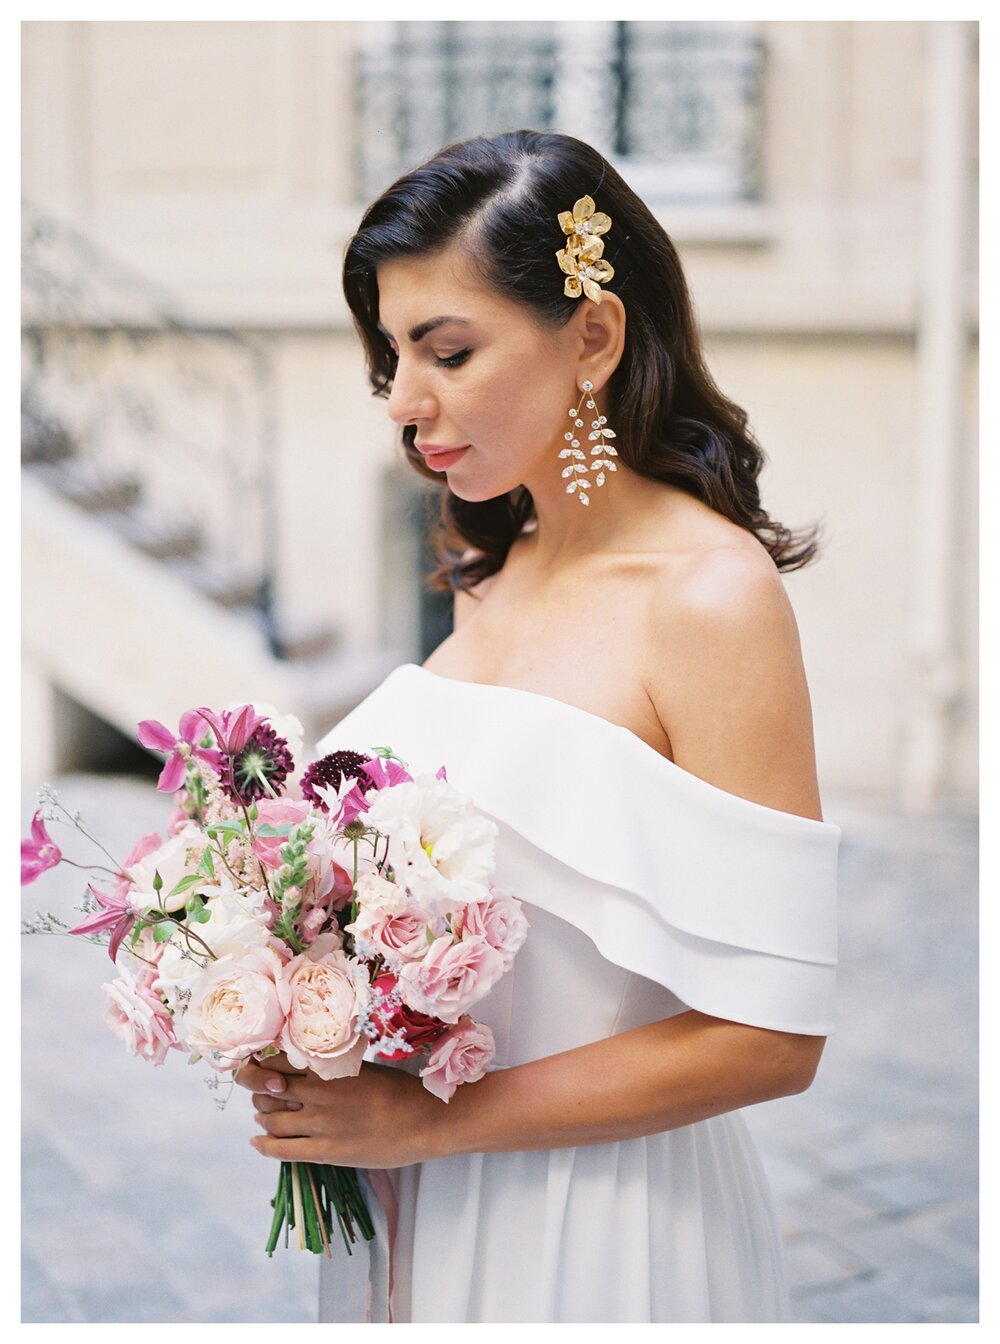  bride portrait, wedding flowers, off the shoulder wedding dress 